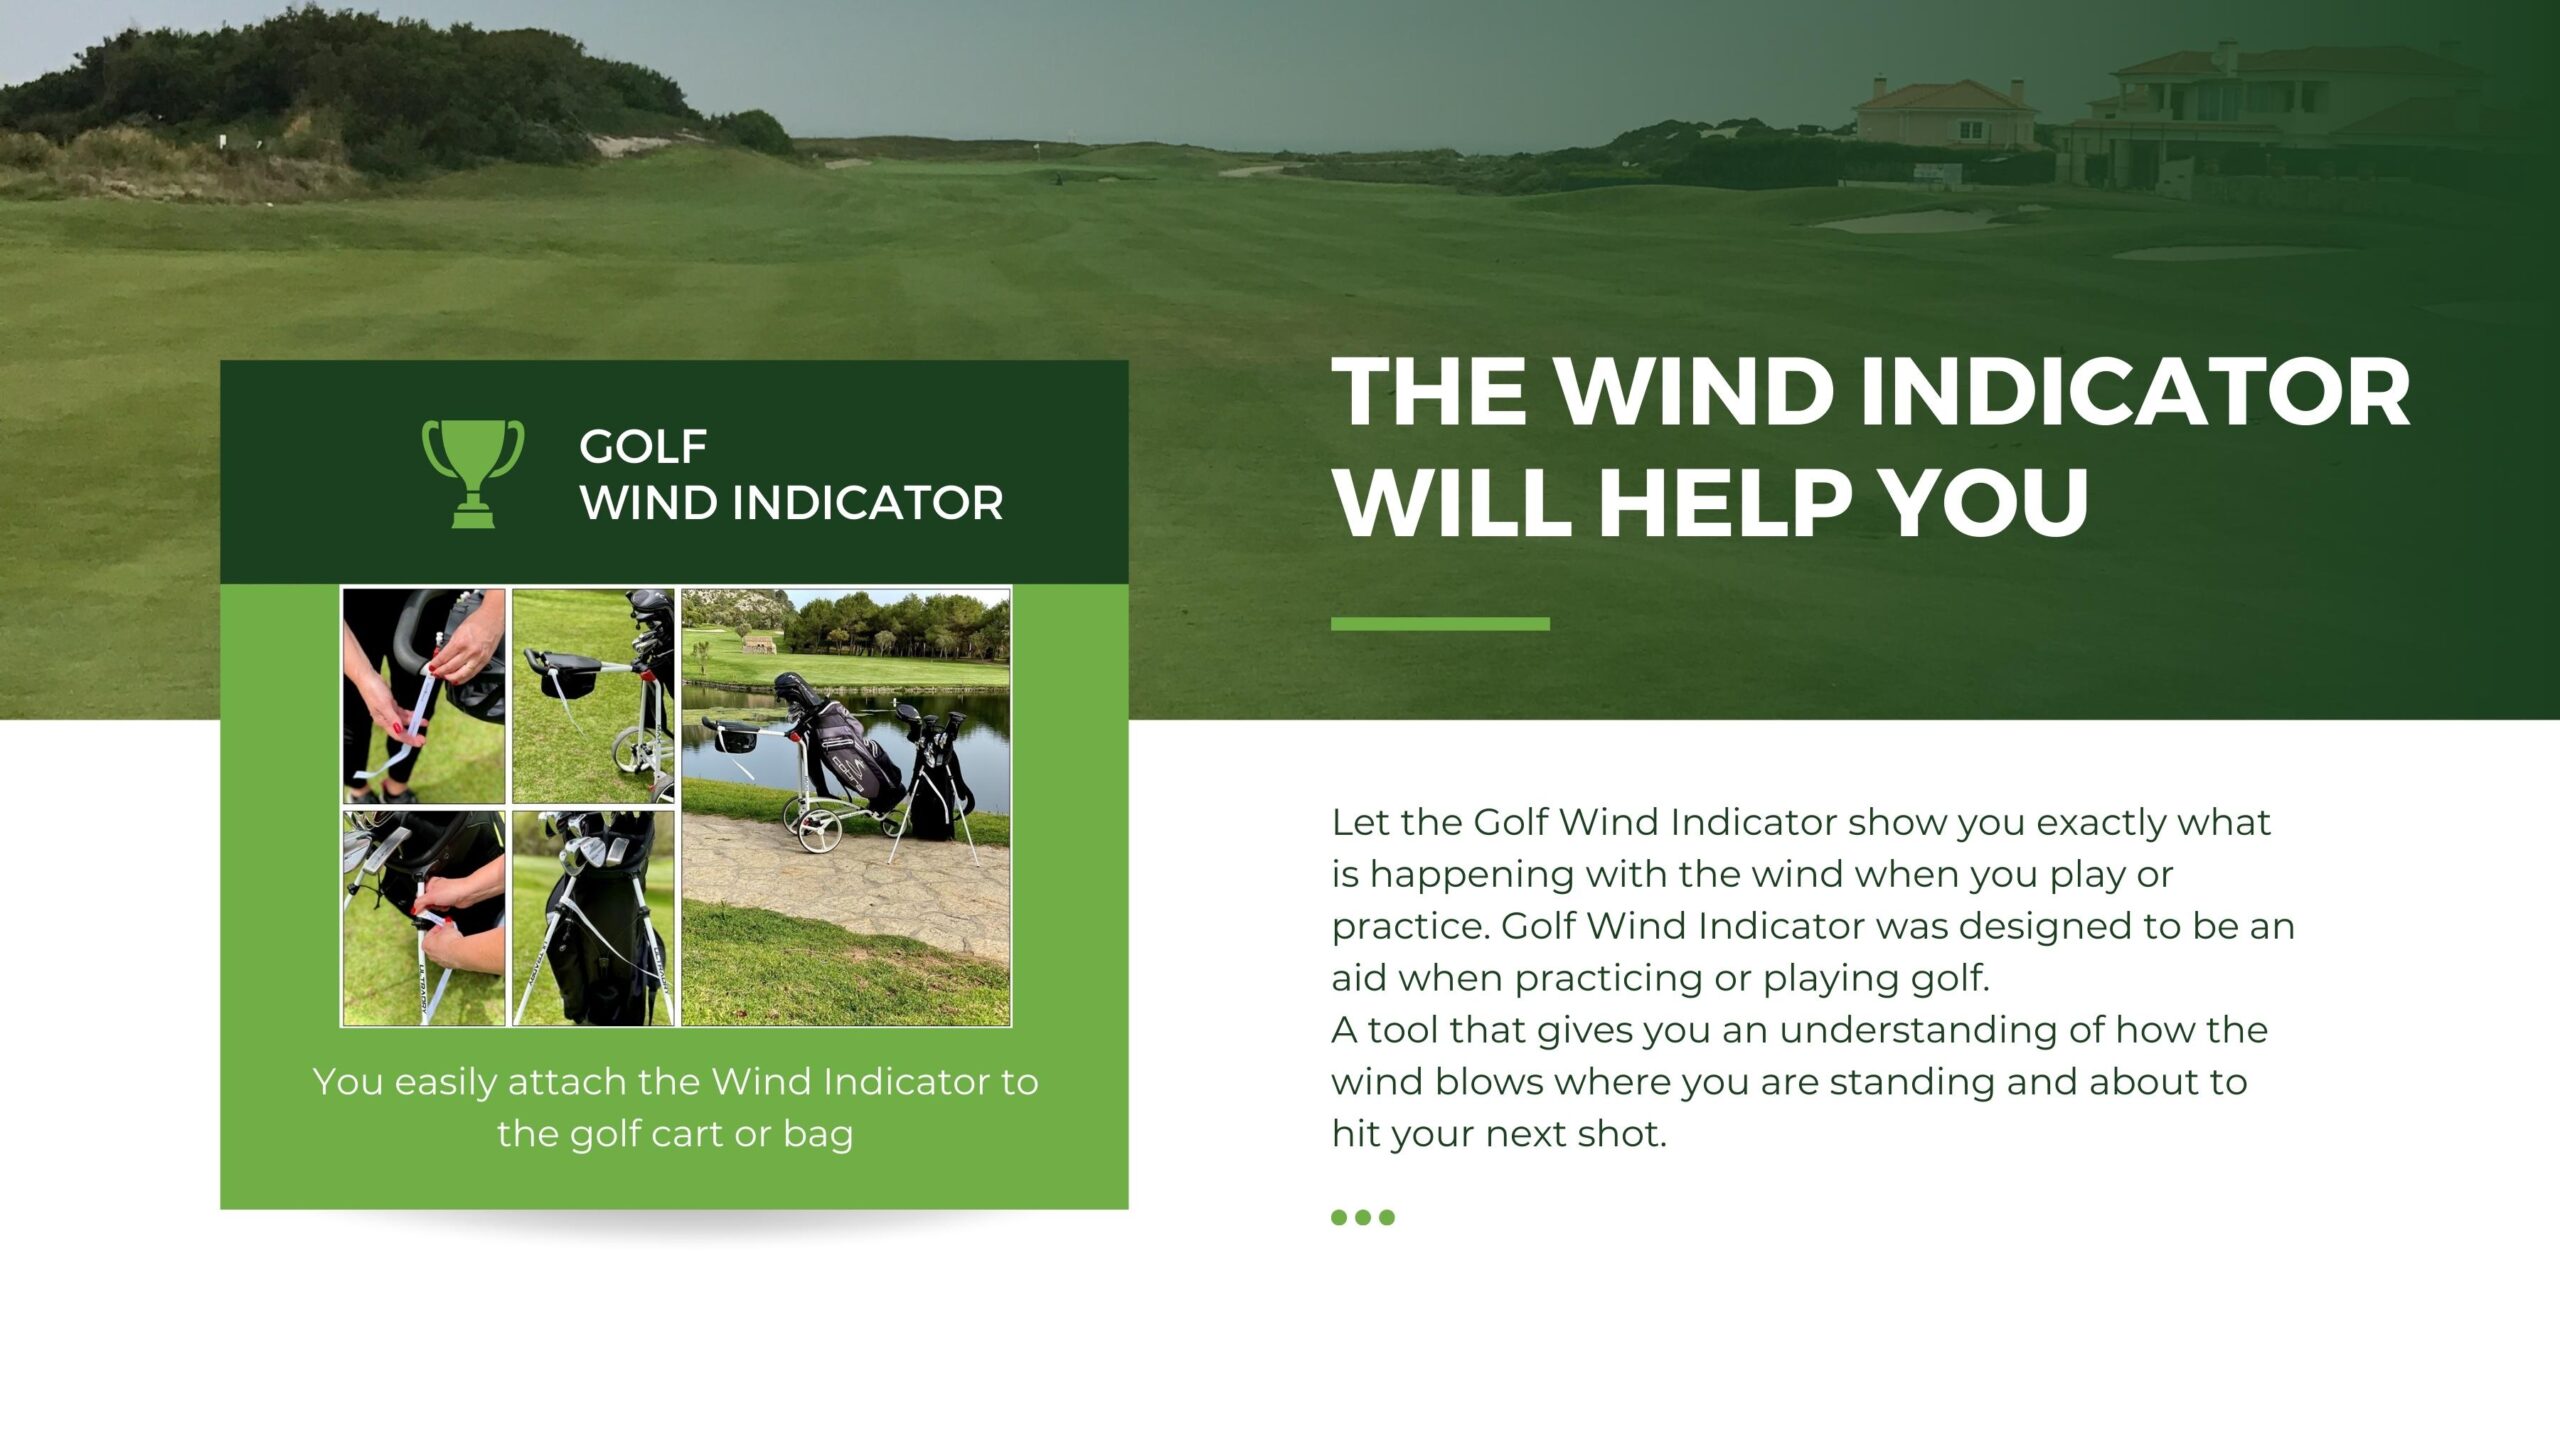 Golf-Wind Indicator